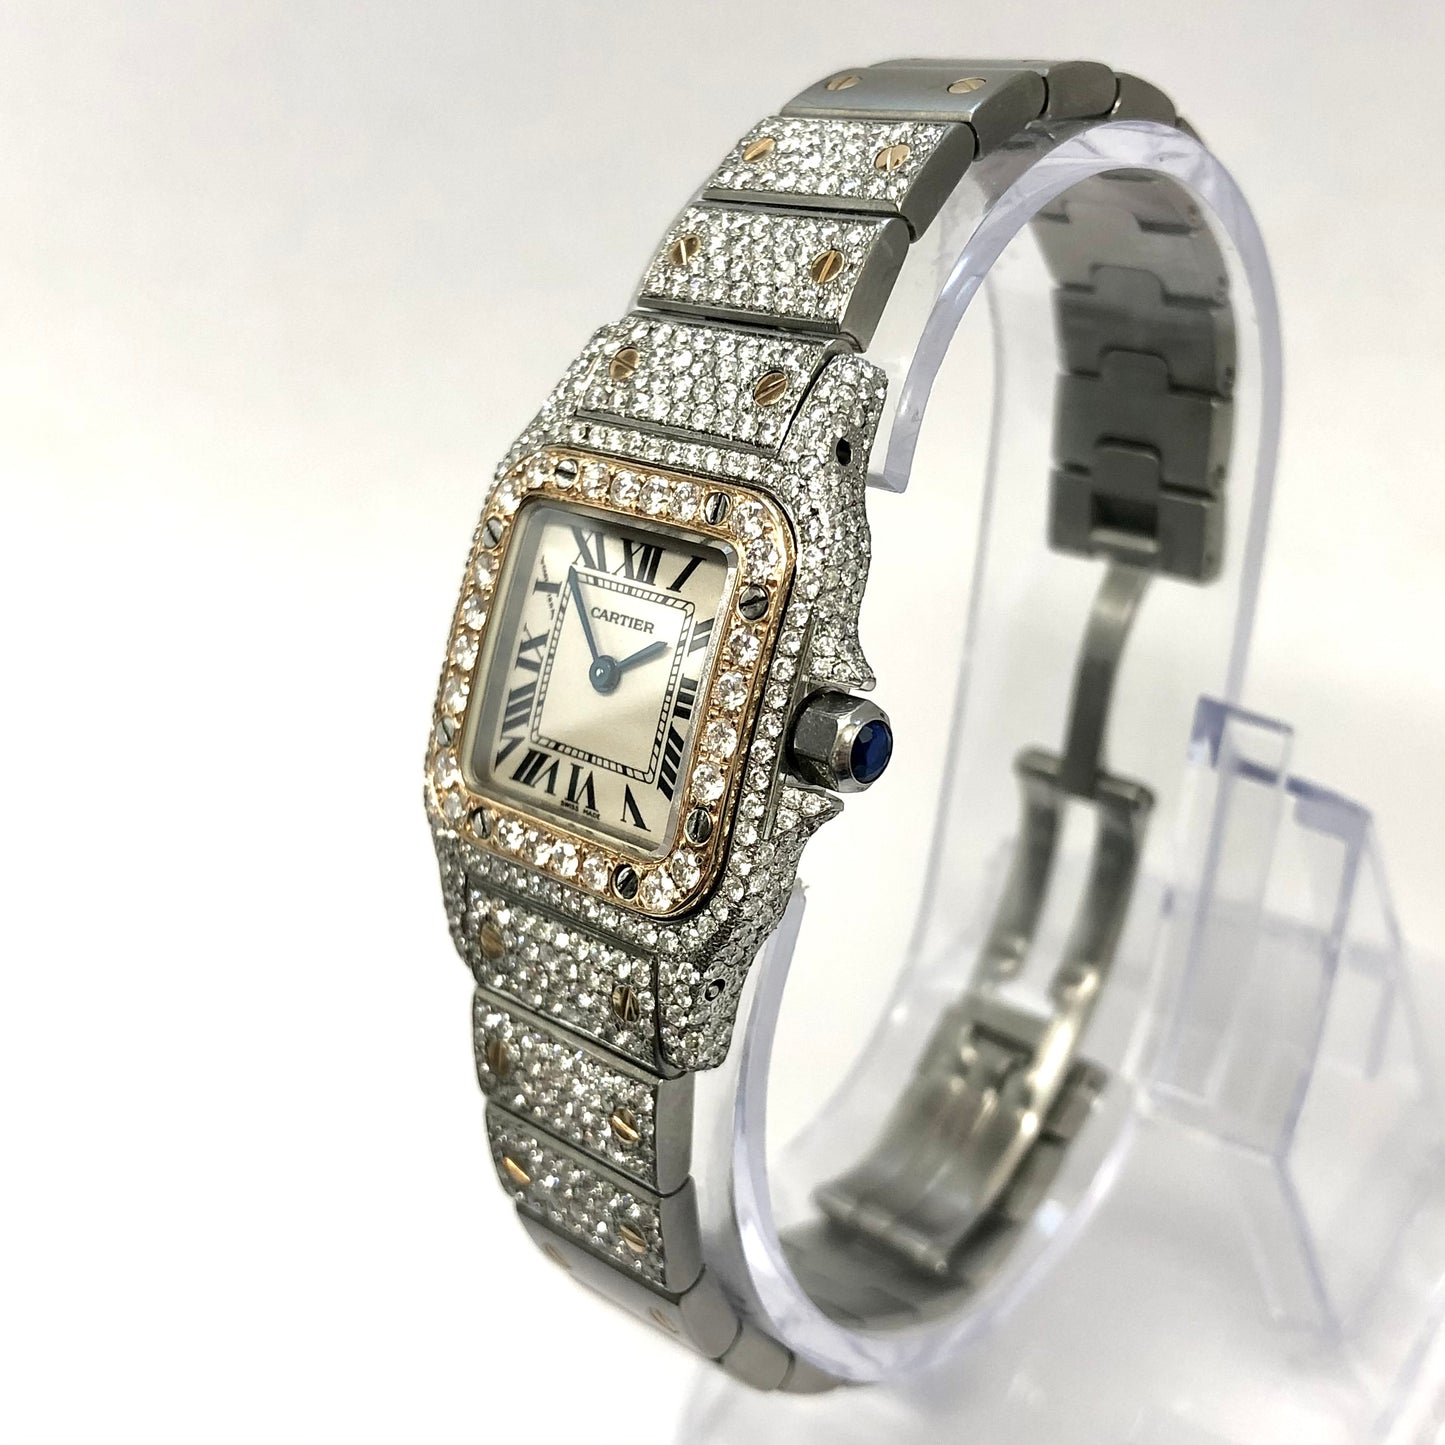 SANTOS De CARTIER GALBEE 24mm Quartz 2 Tone 4.08TCW Diamond Watch NEW Model